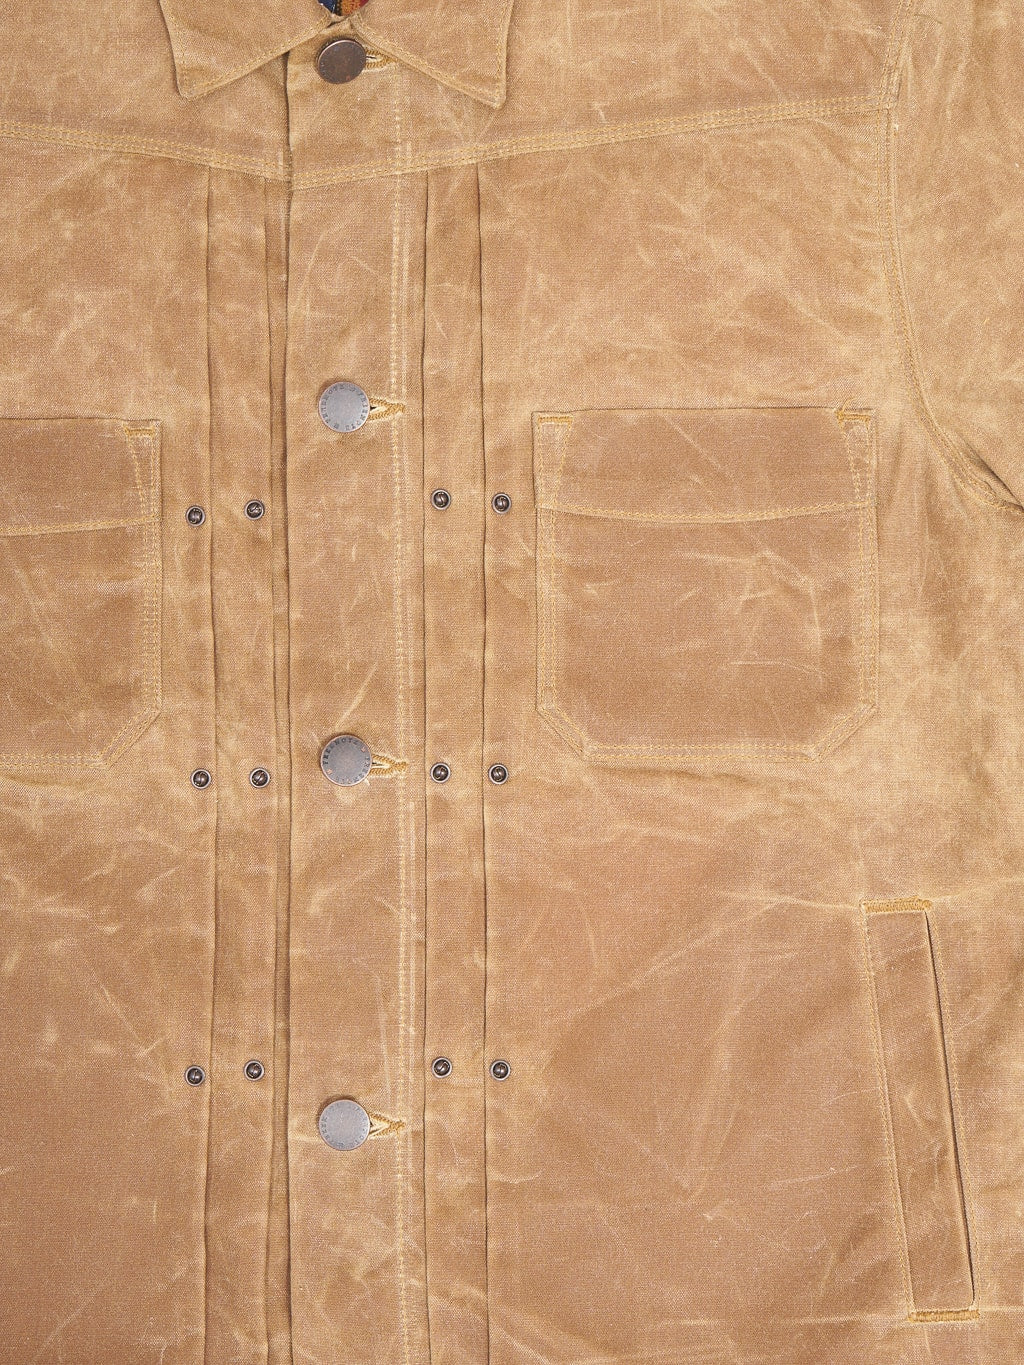 Freenote Cloth Riders Jacket Waxed Canvas Rust fabric texture